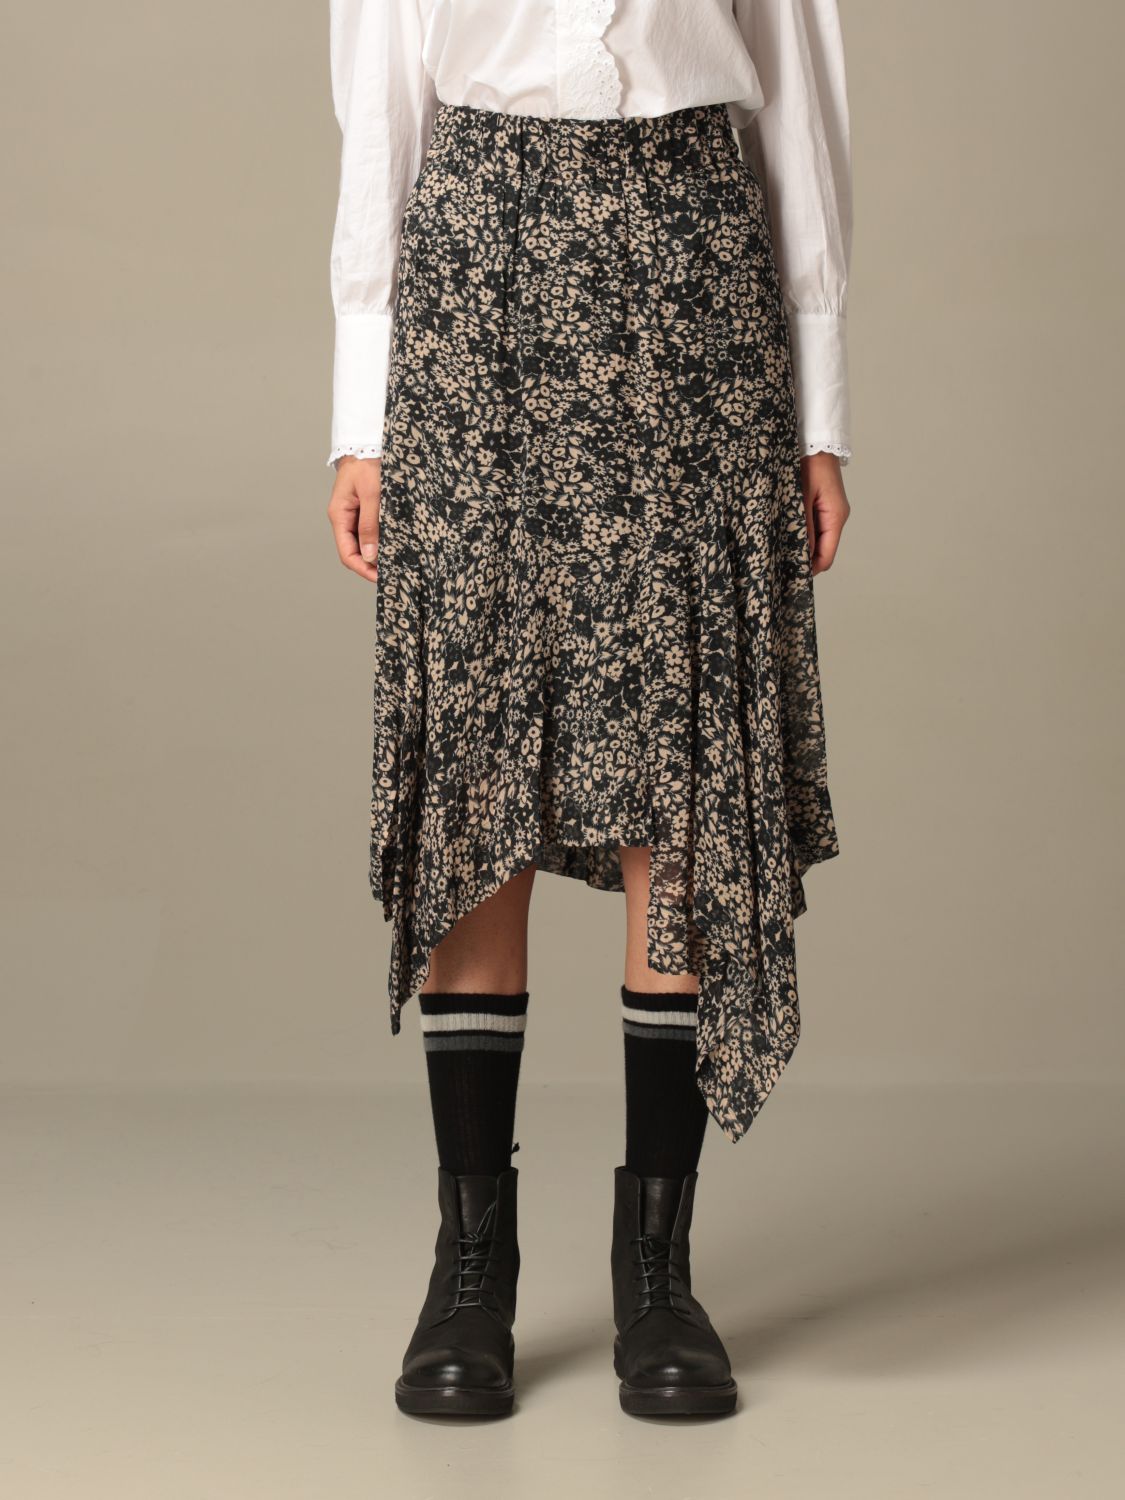 ISABEL MARANT ETOILE: longuette skirt with floral pattern - Black ...